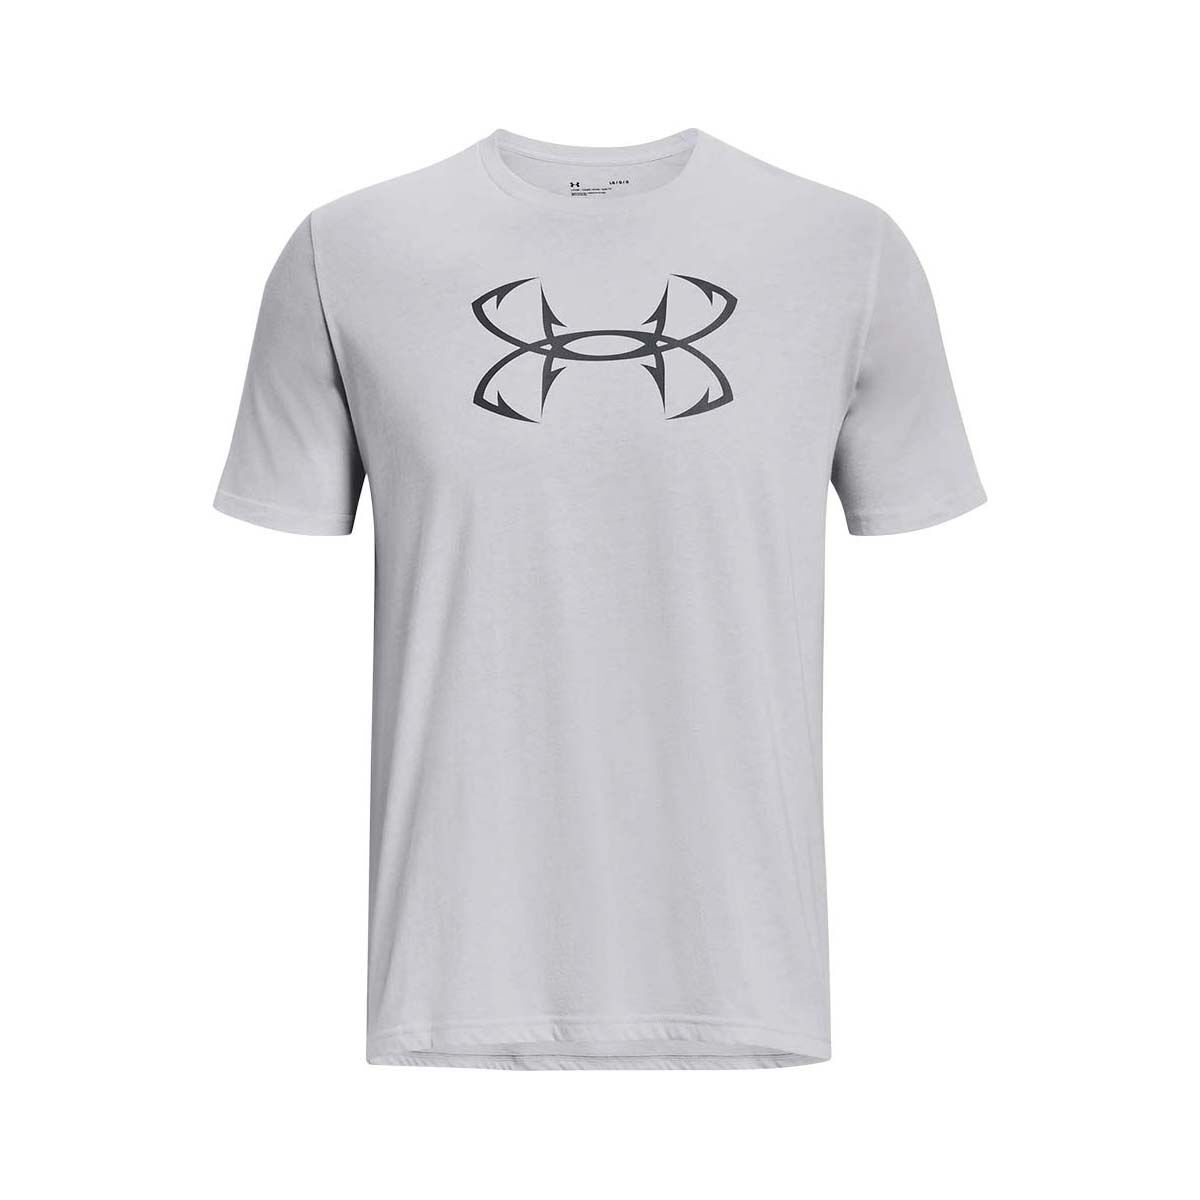 Under Armour Men’s Fish Hook Logo Short Sleeve Tee S